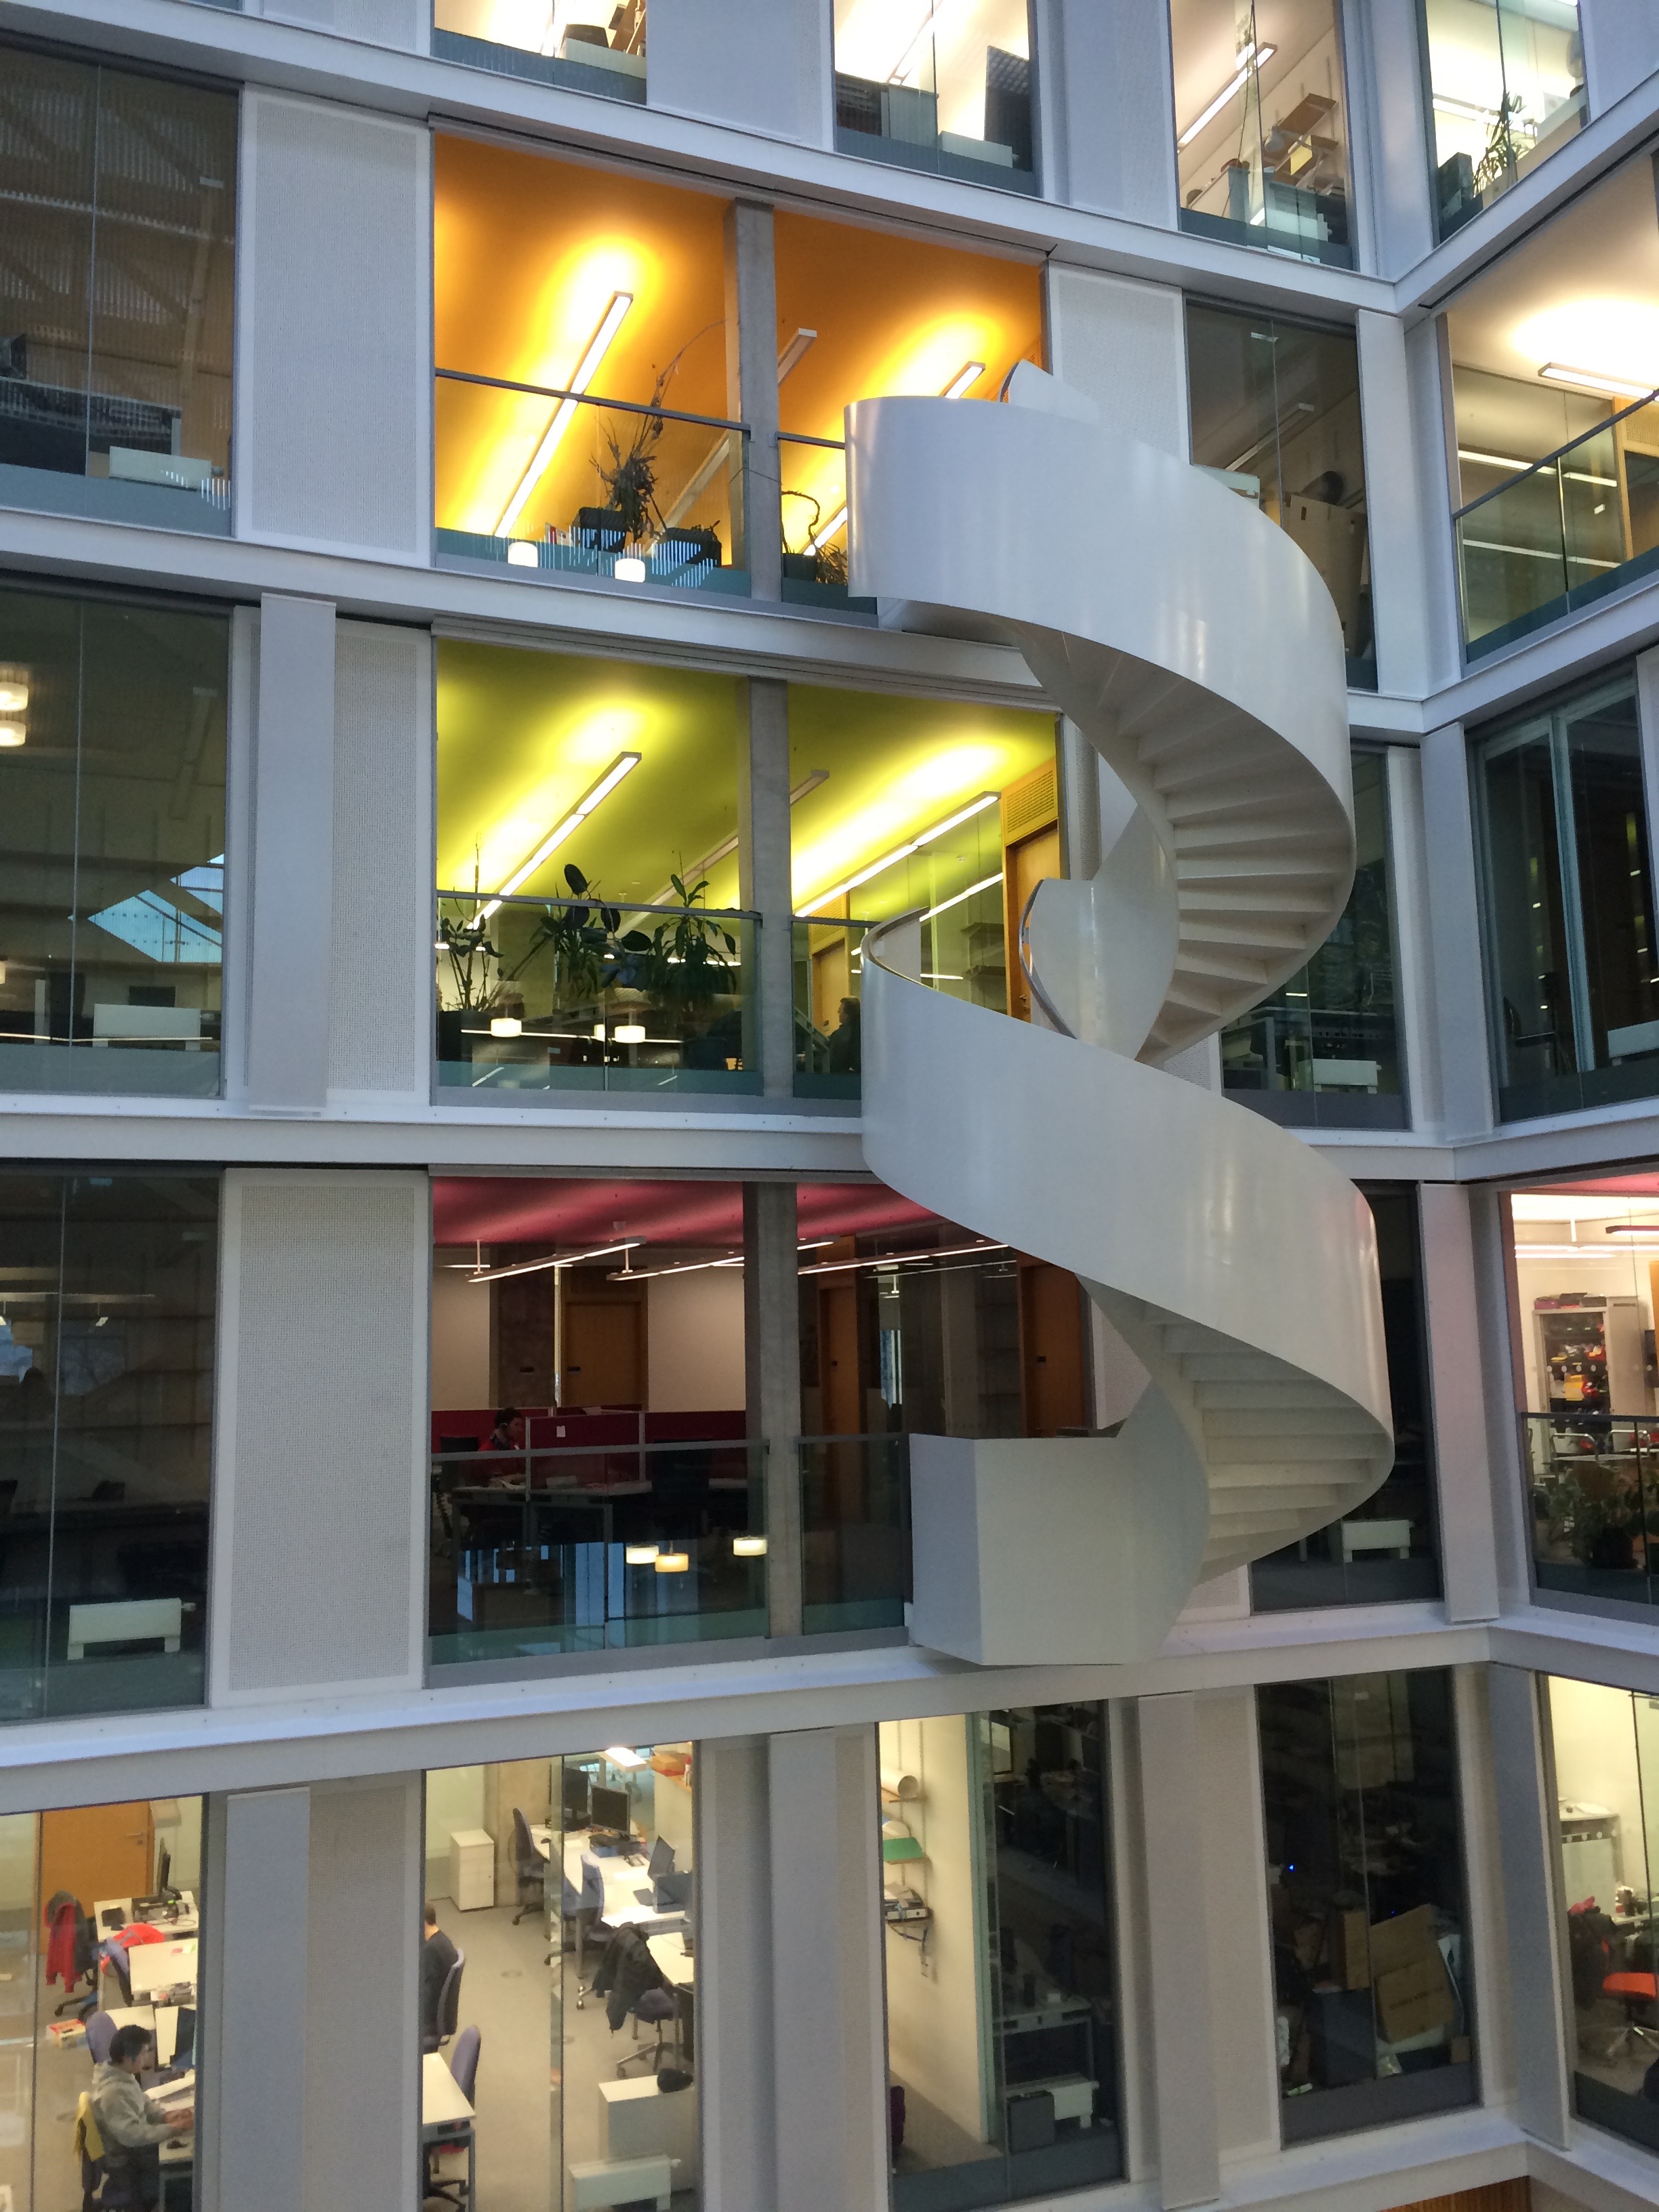 Inside the colorful School of Informatics at Edinburgh